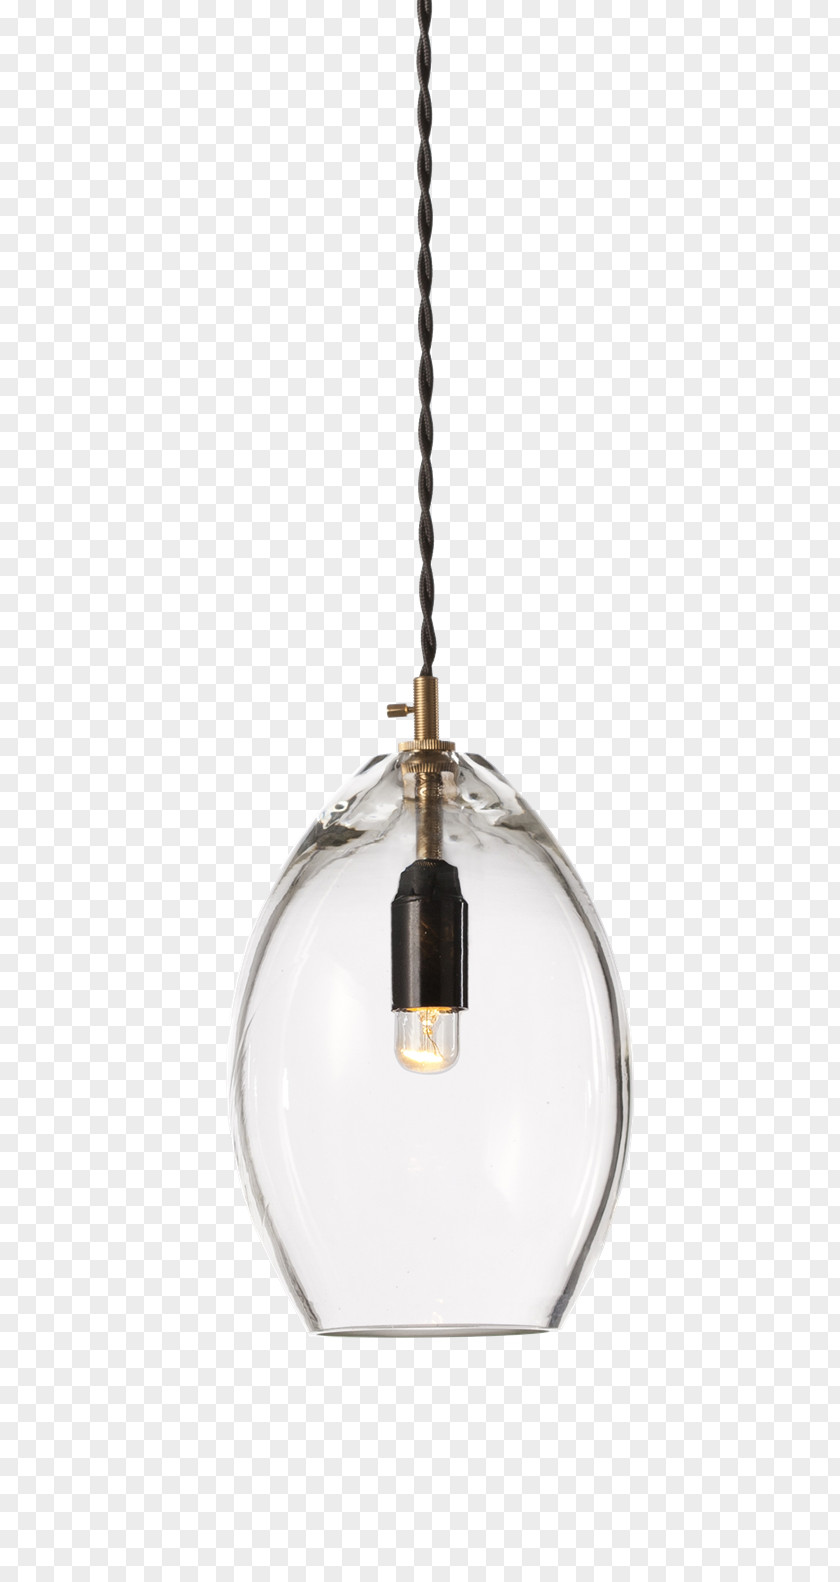 Glass Northern Lighting Lamp PNG